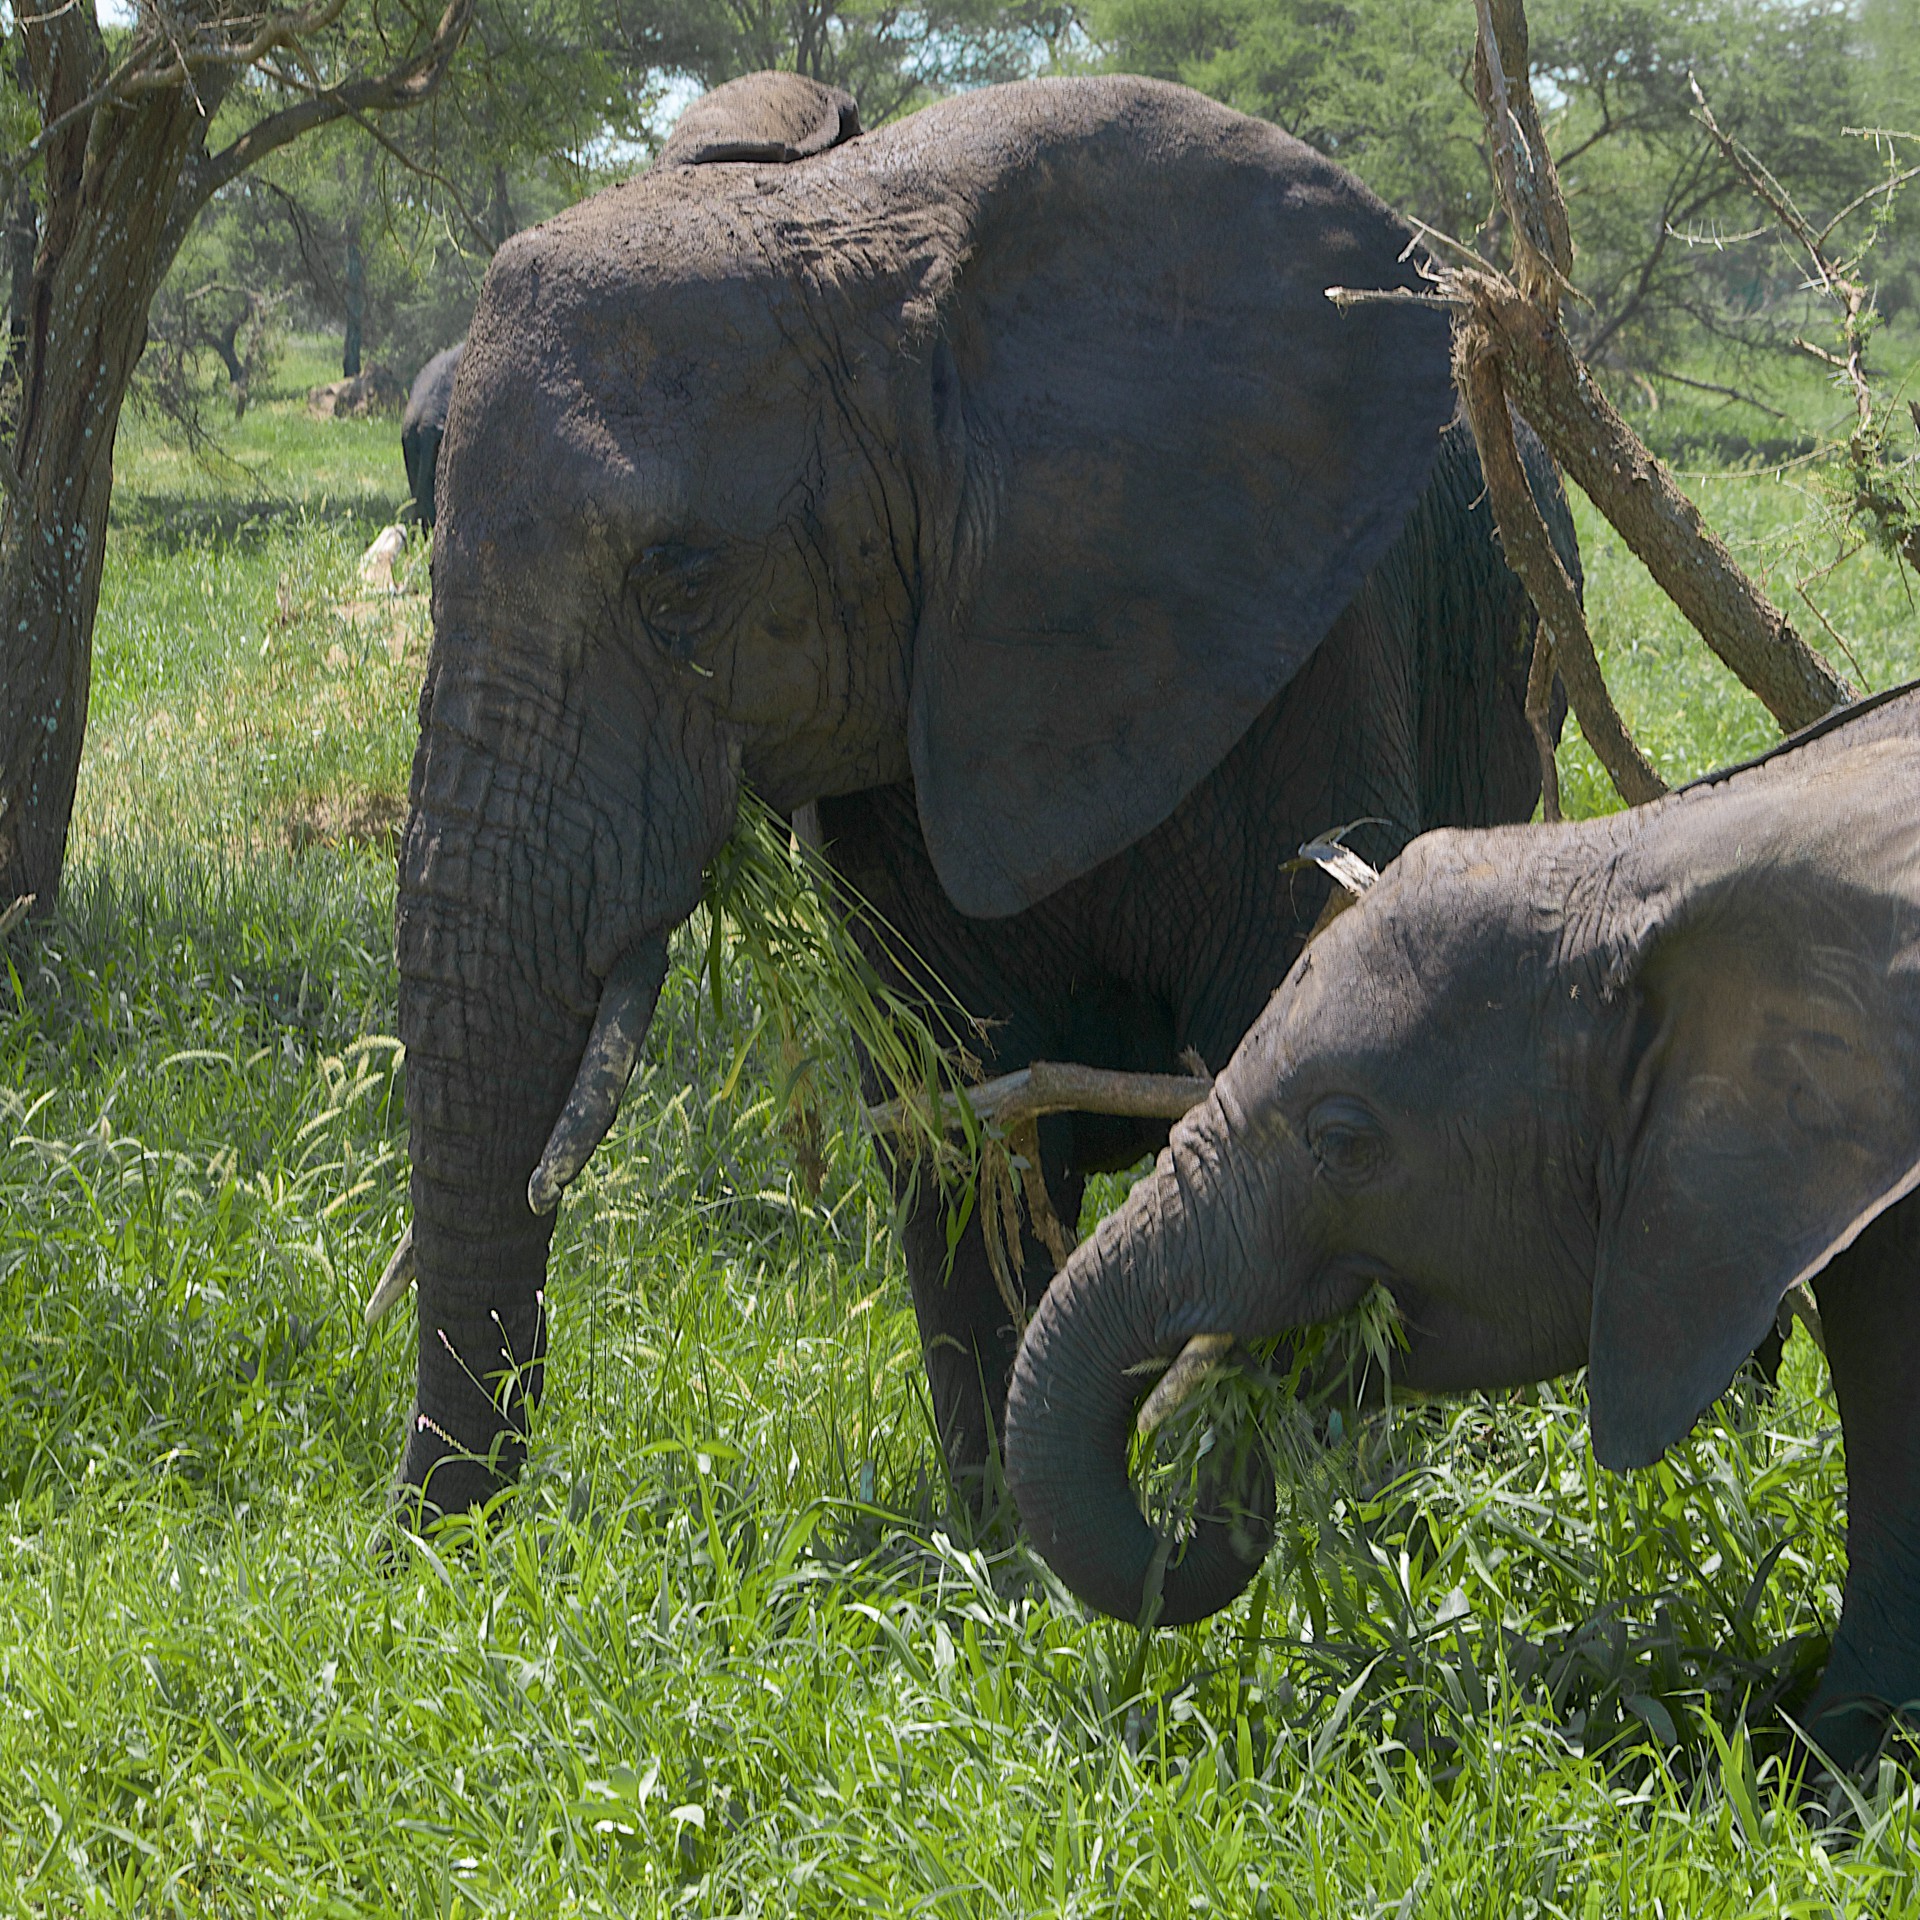 Grazende olifanten